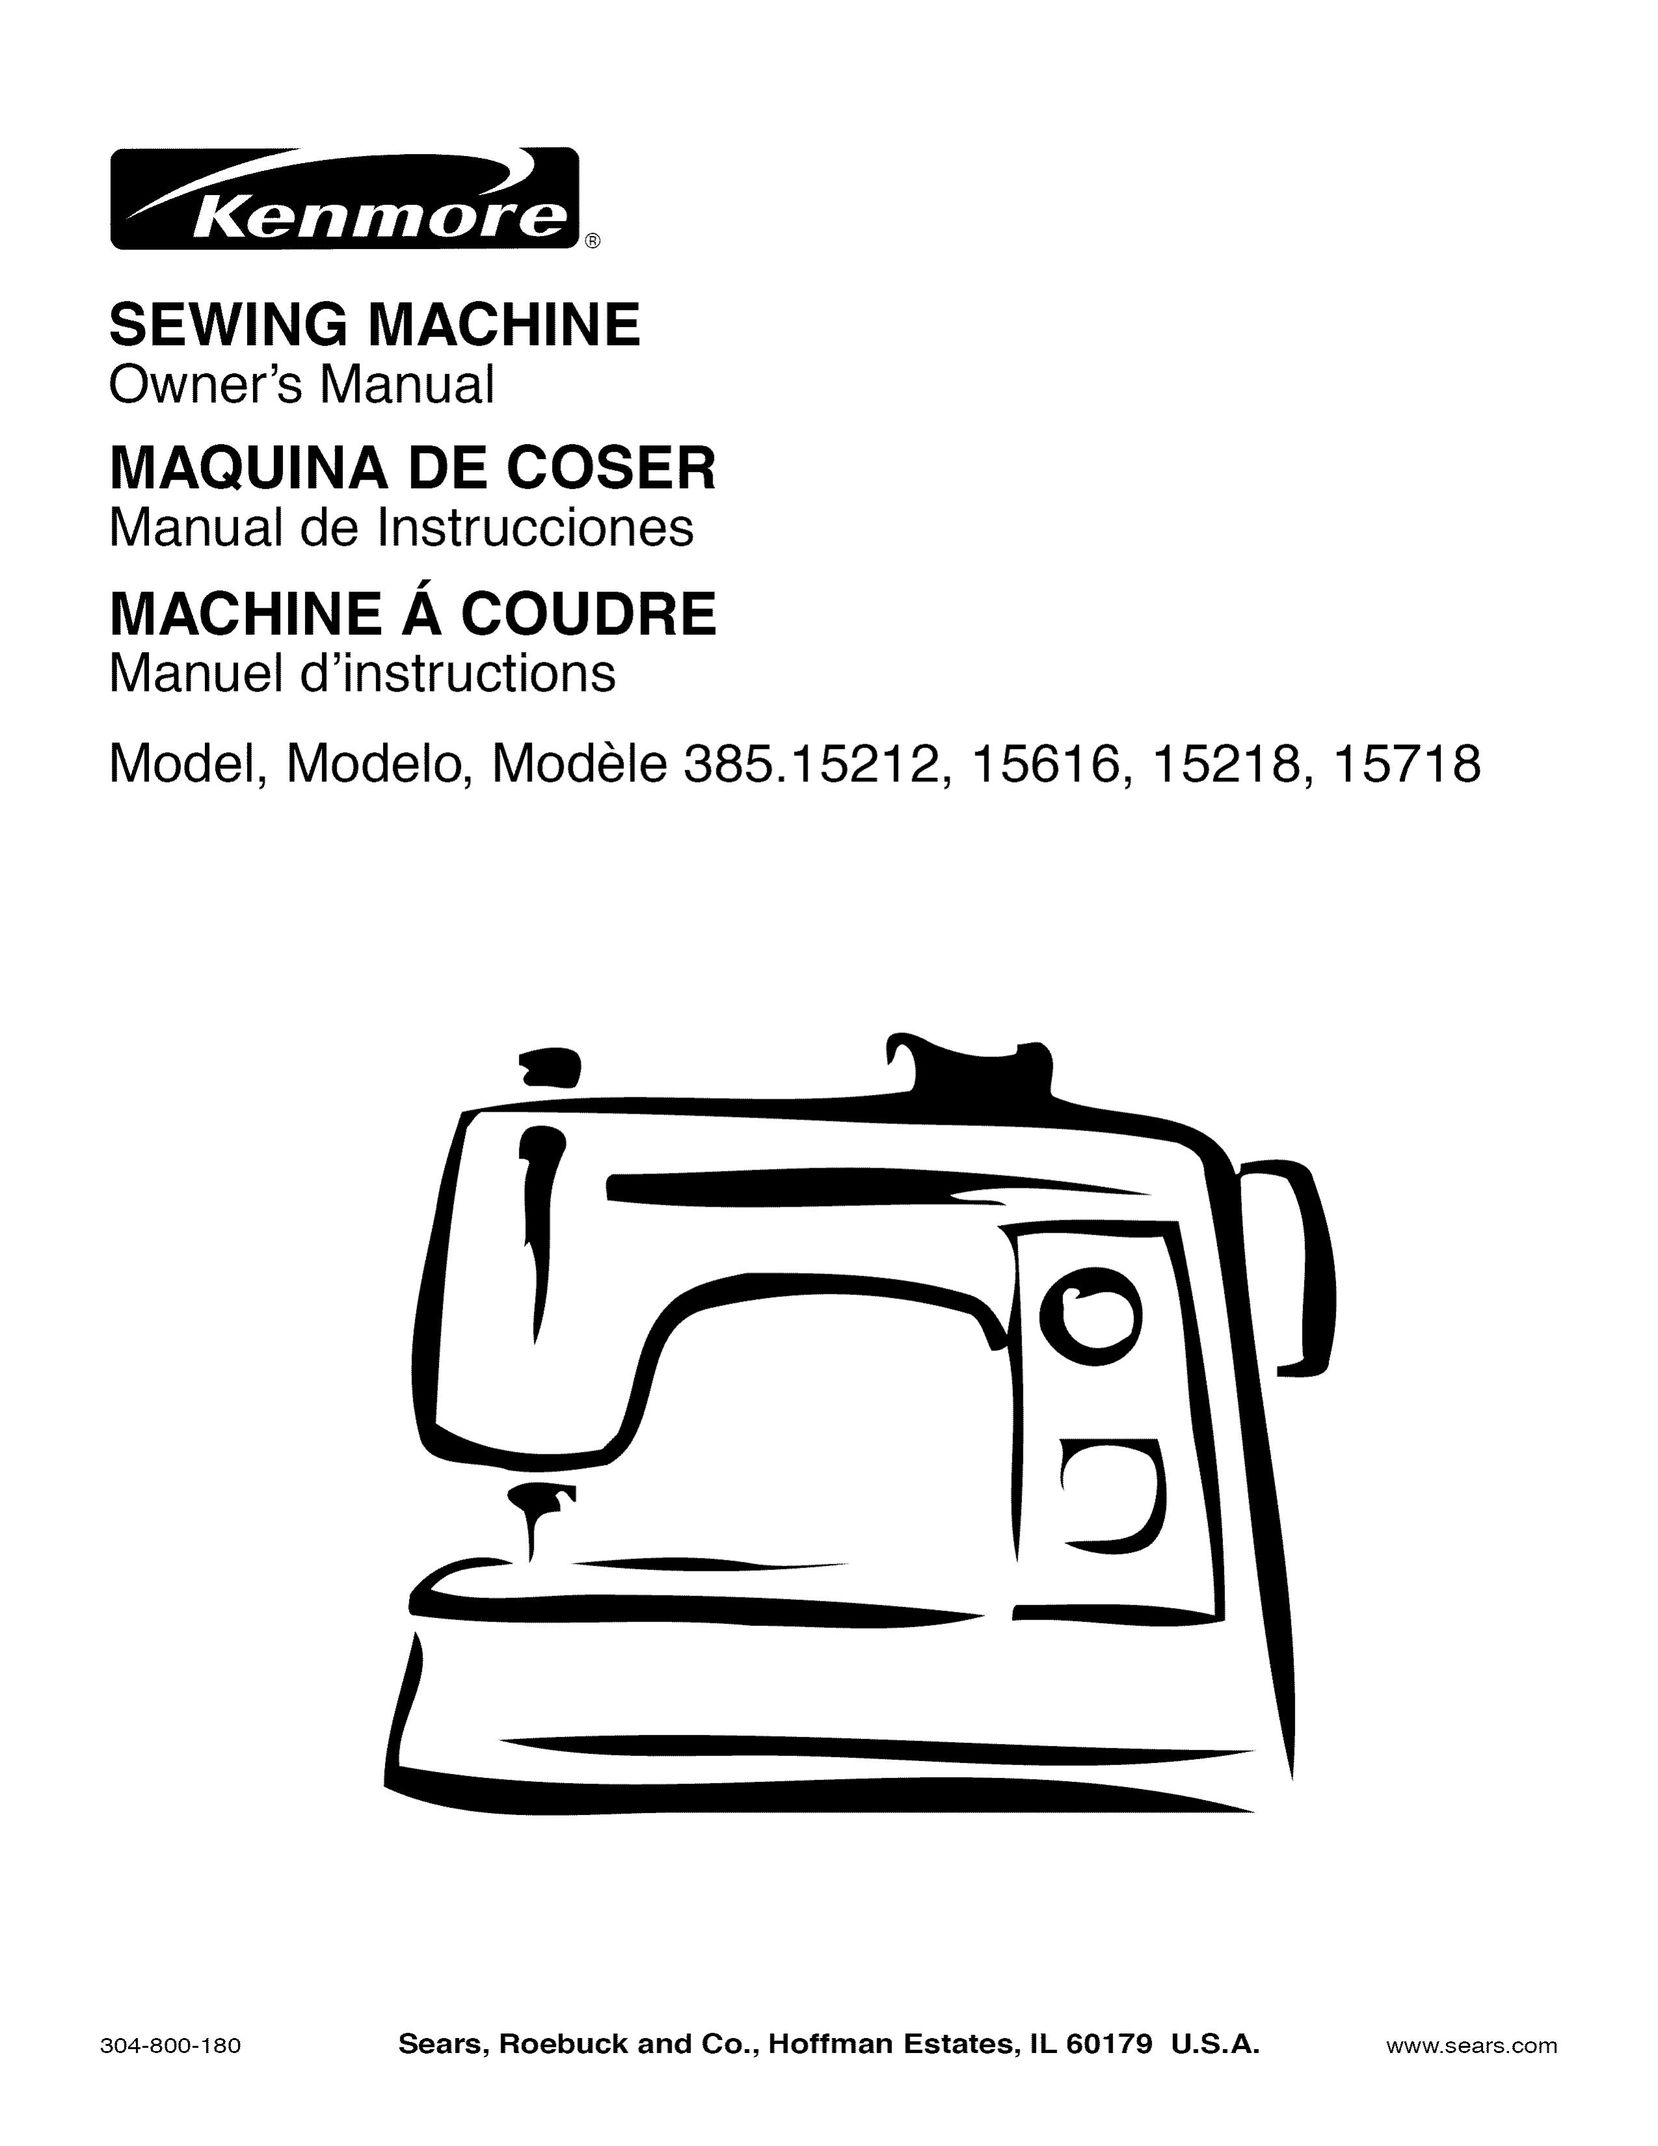 Kenmore 15616 Sewing Machine User Manual